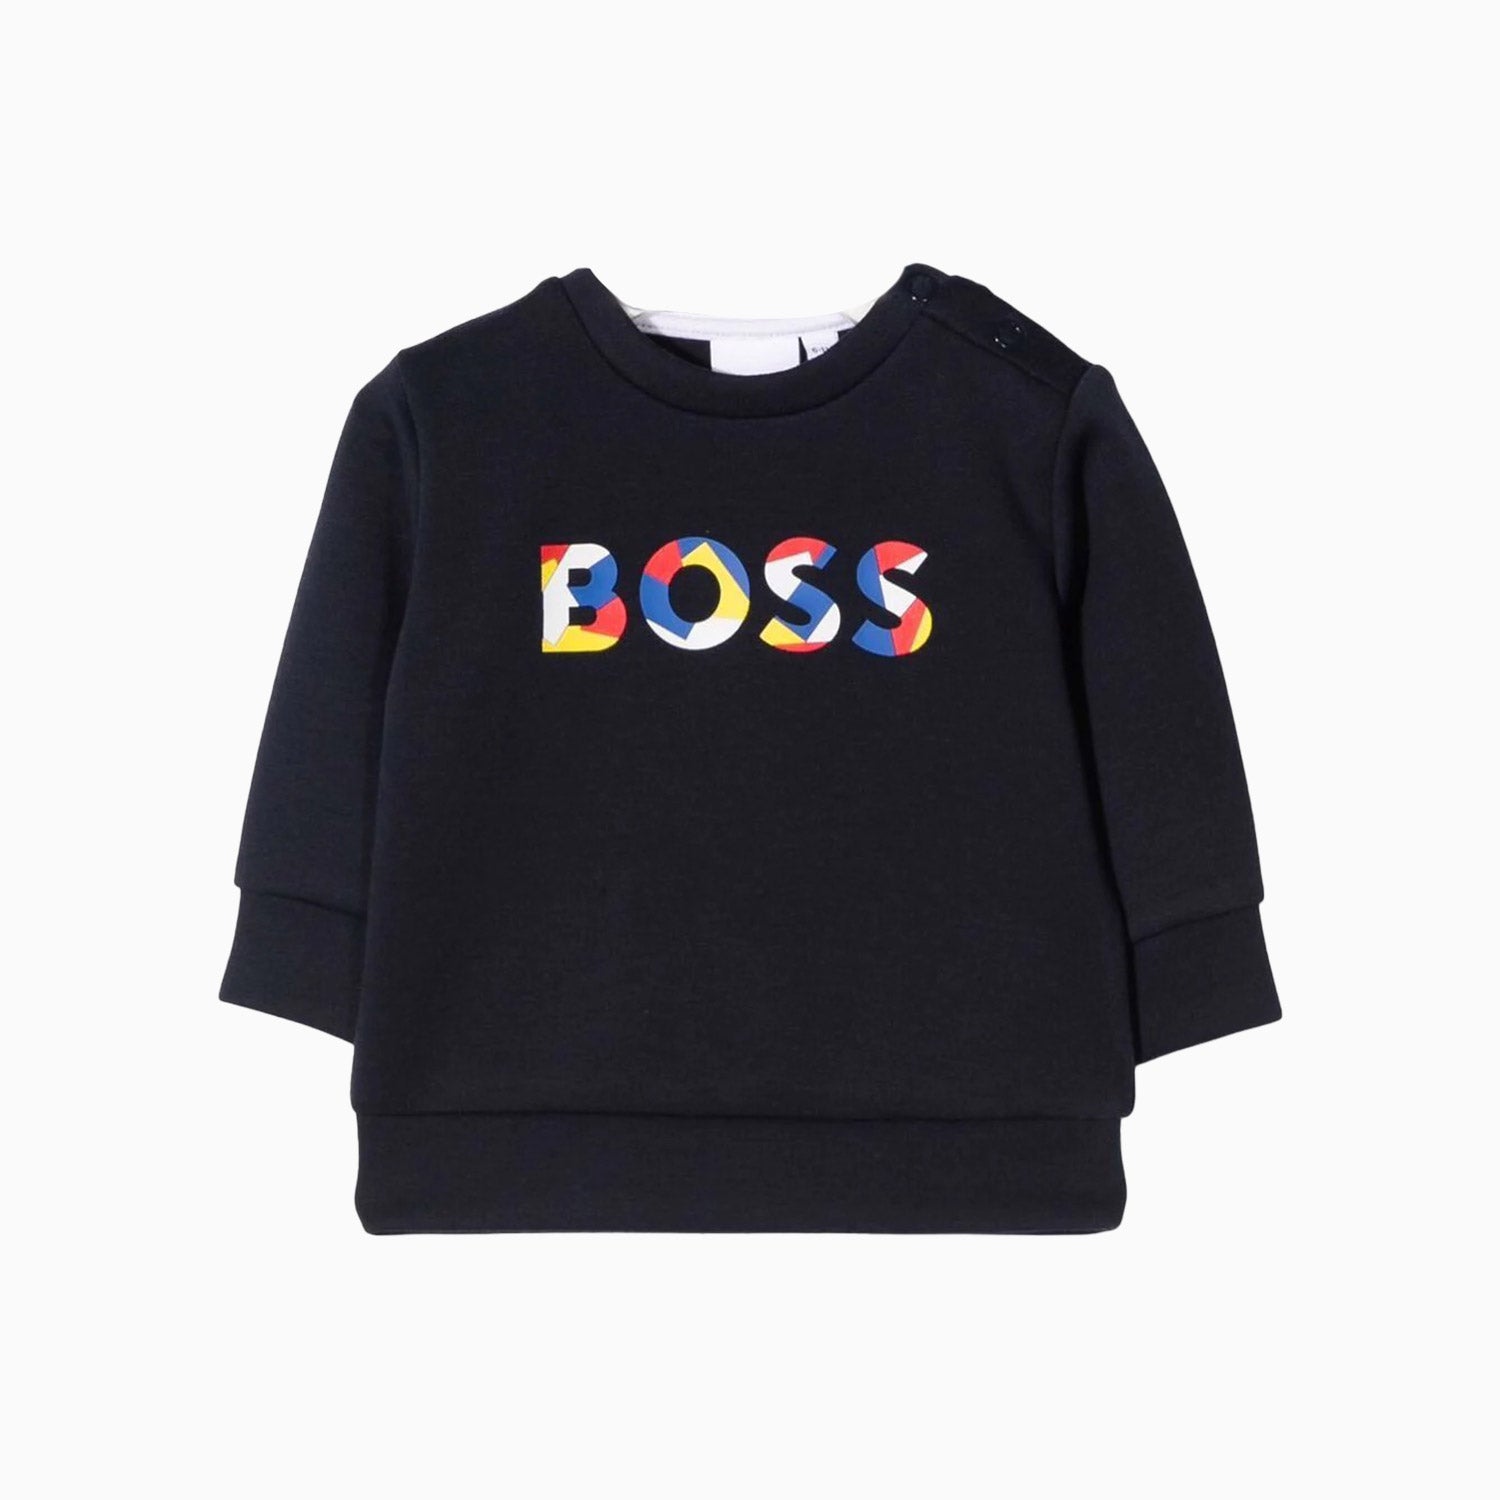 hugo-boss-kids-logo-print-sweatshirt-j05935-849